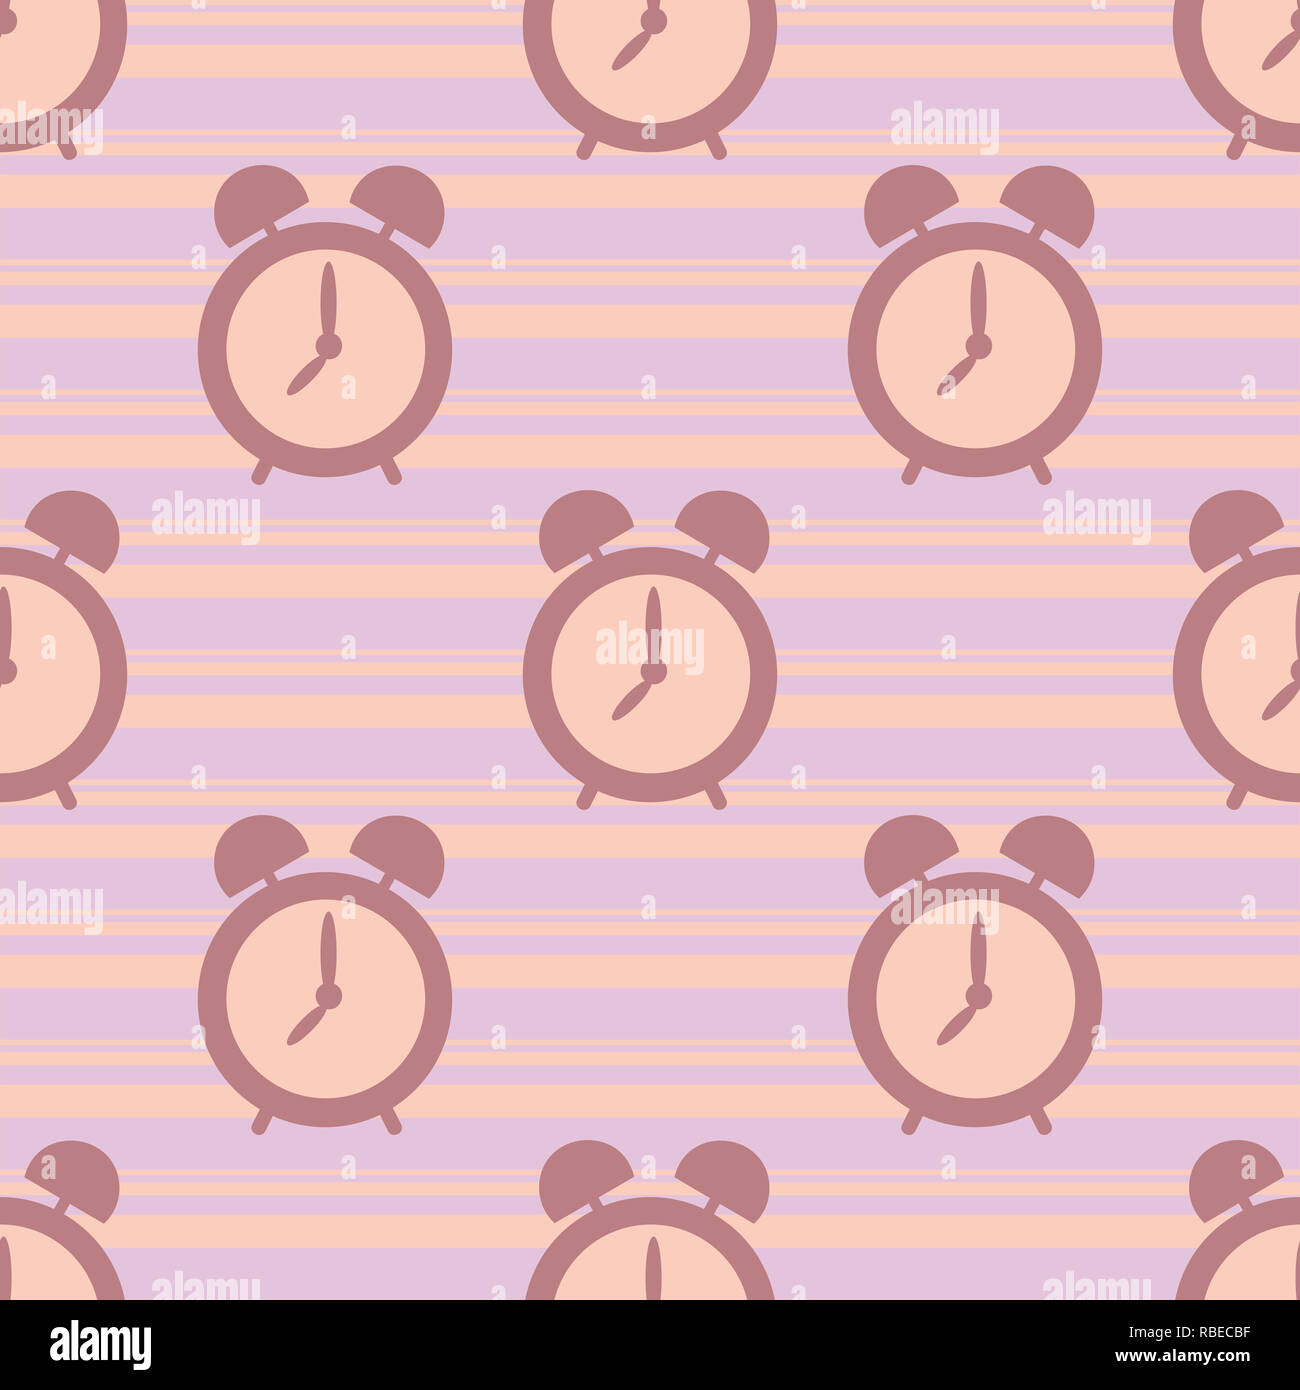 Seamless alarm clock pattern on striped background Stock Photo